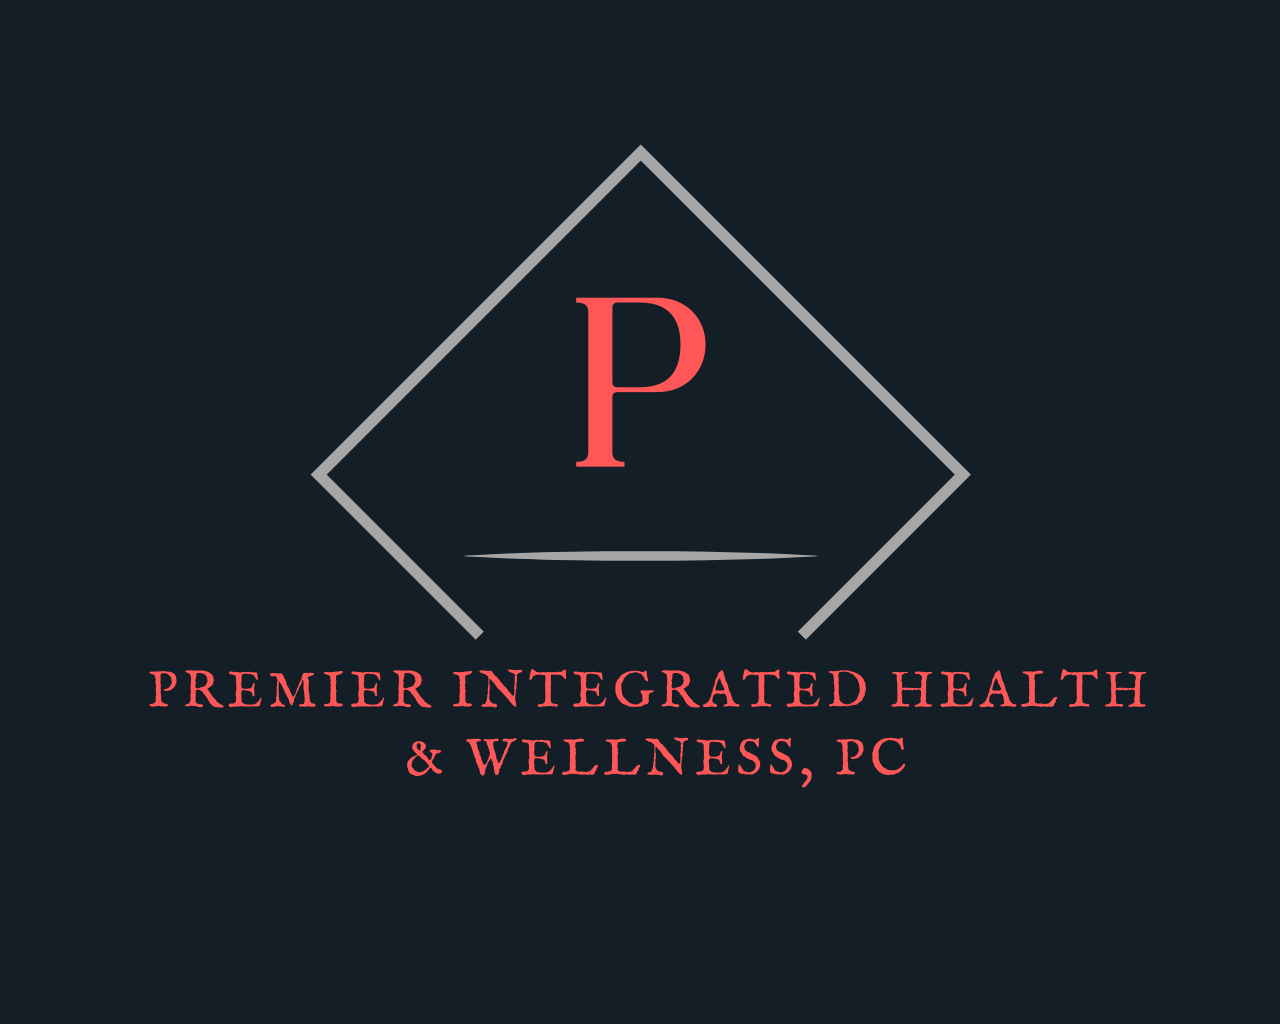 Premier Integrated Health & Wellness, PC